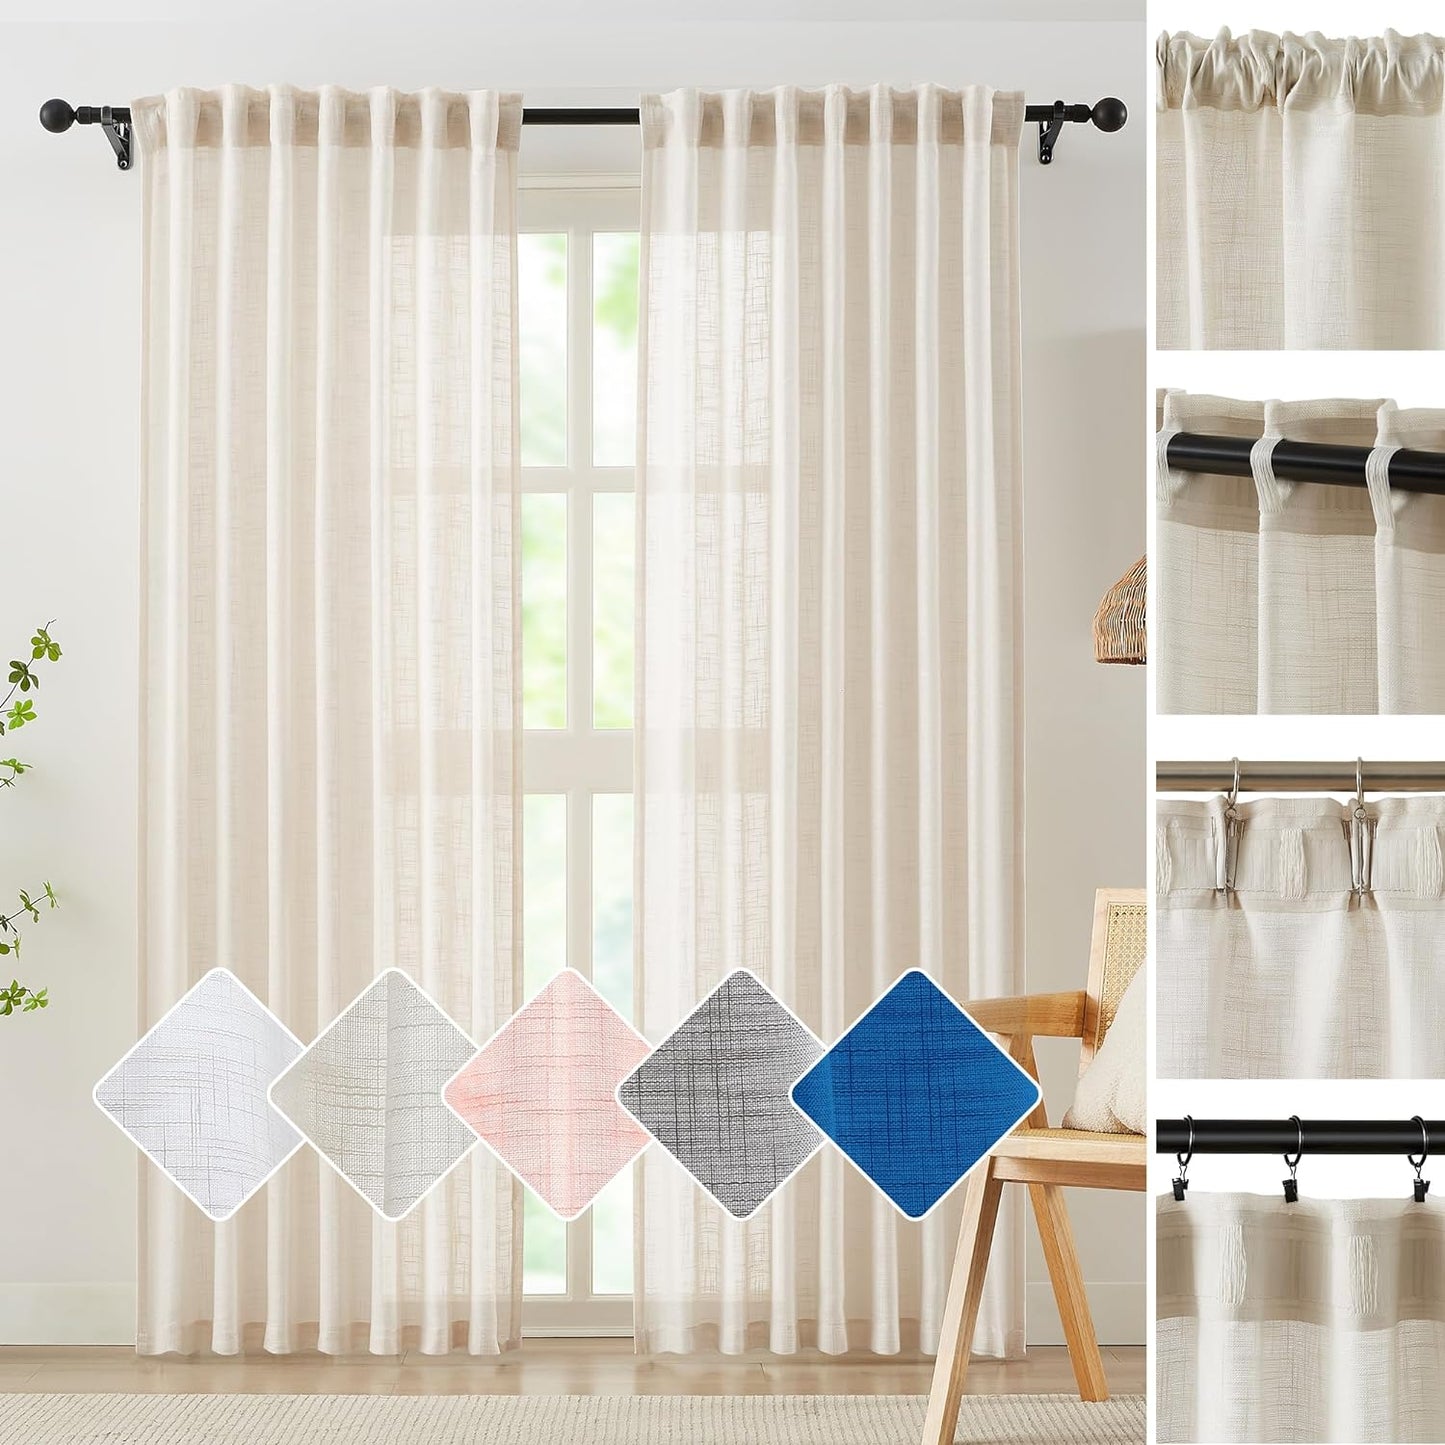 FMFUNCTEX Natural Semi-Sheer Curtains for Living Room Rich Linen Textured Look Window Curtain Draperies 52”W X63”L 2 Panels Grommet Top  Fmfunctex Multi Top - Natural (Linen Look) 52" X 84" 2Pcs 